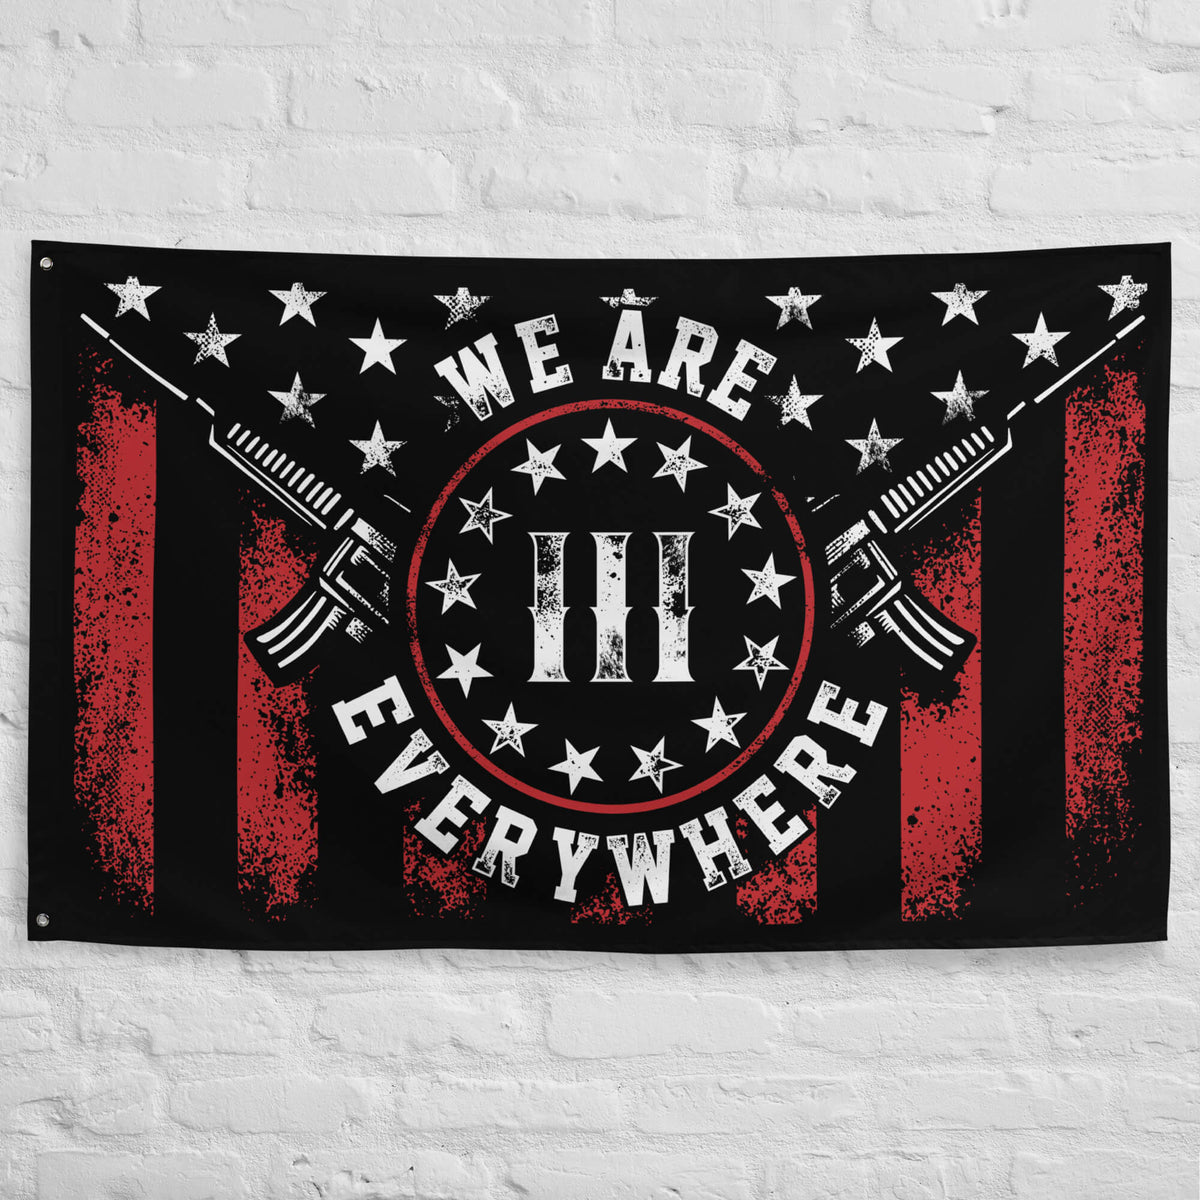 We are Everywhere! (Flag)